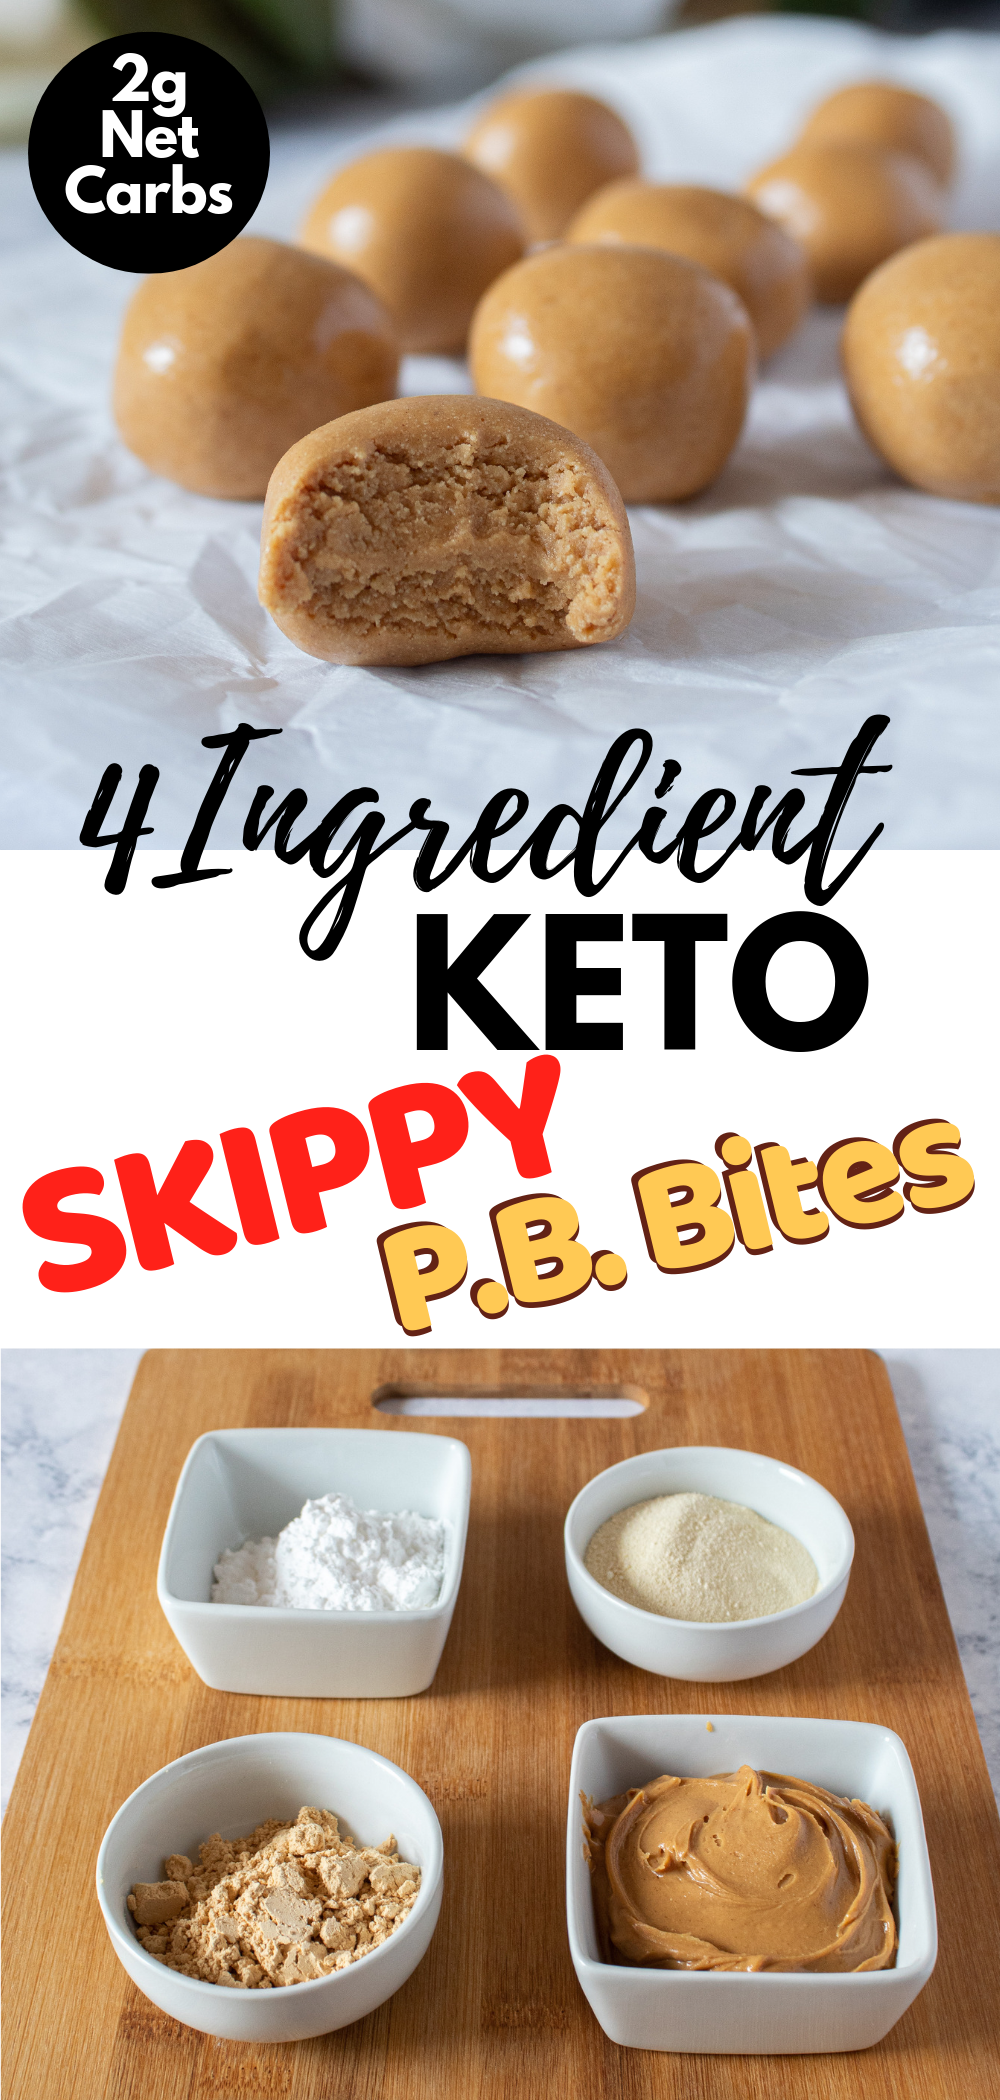 How To Make Keto Skippy P.B. Bites - Easy Copycat Recipe